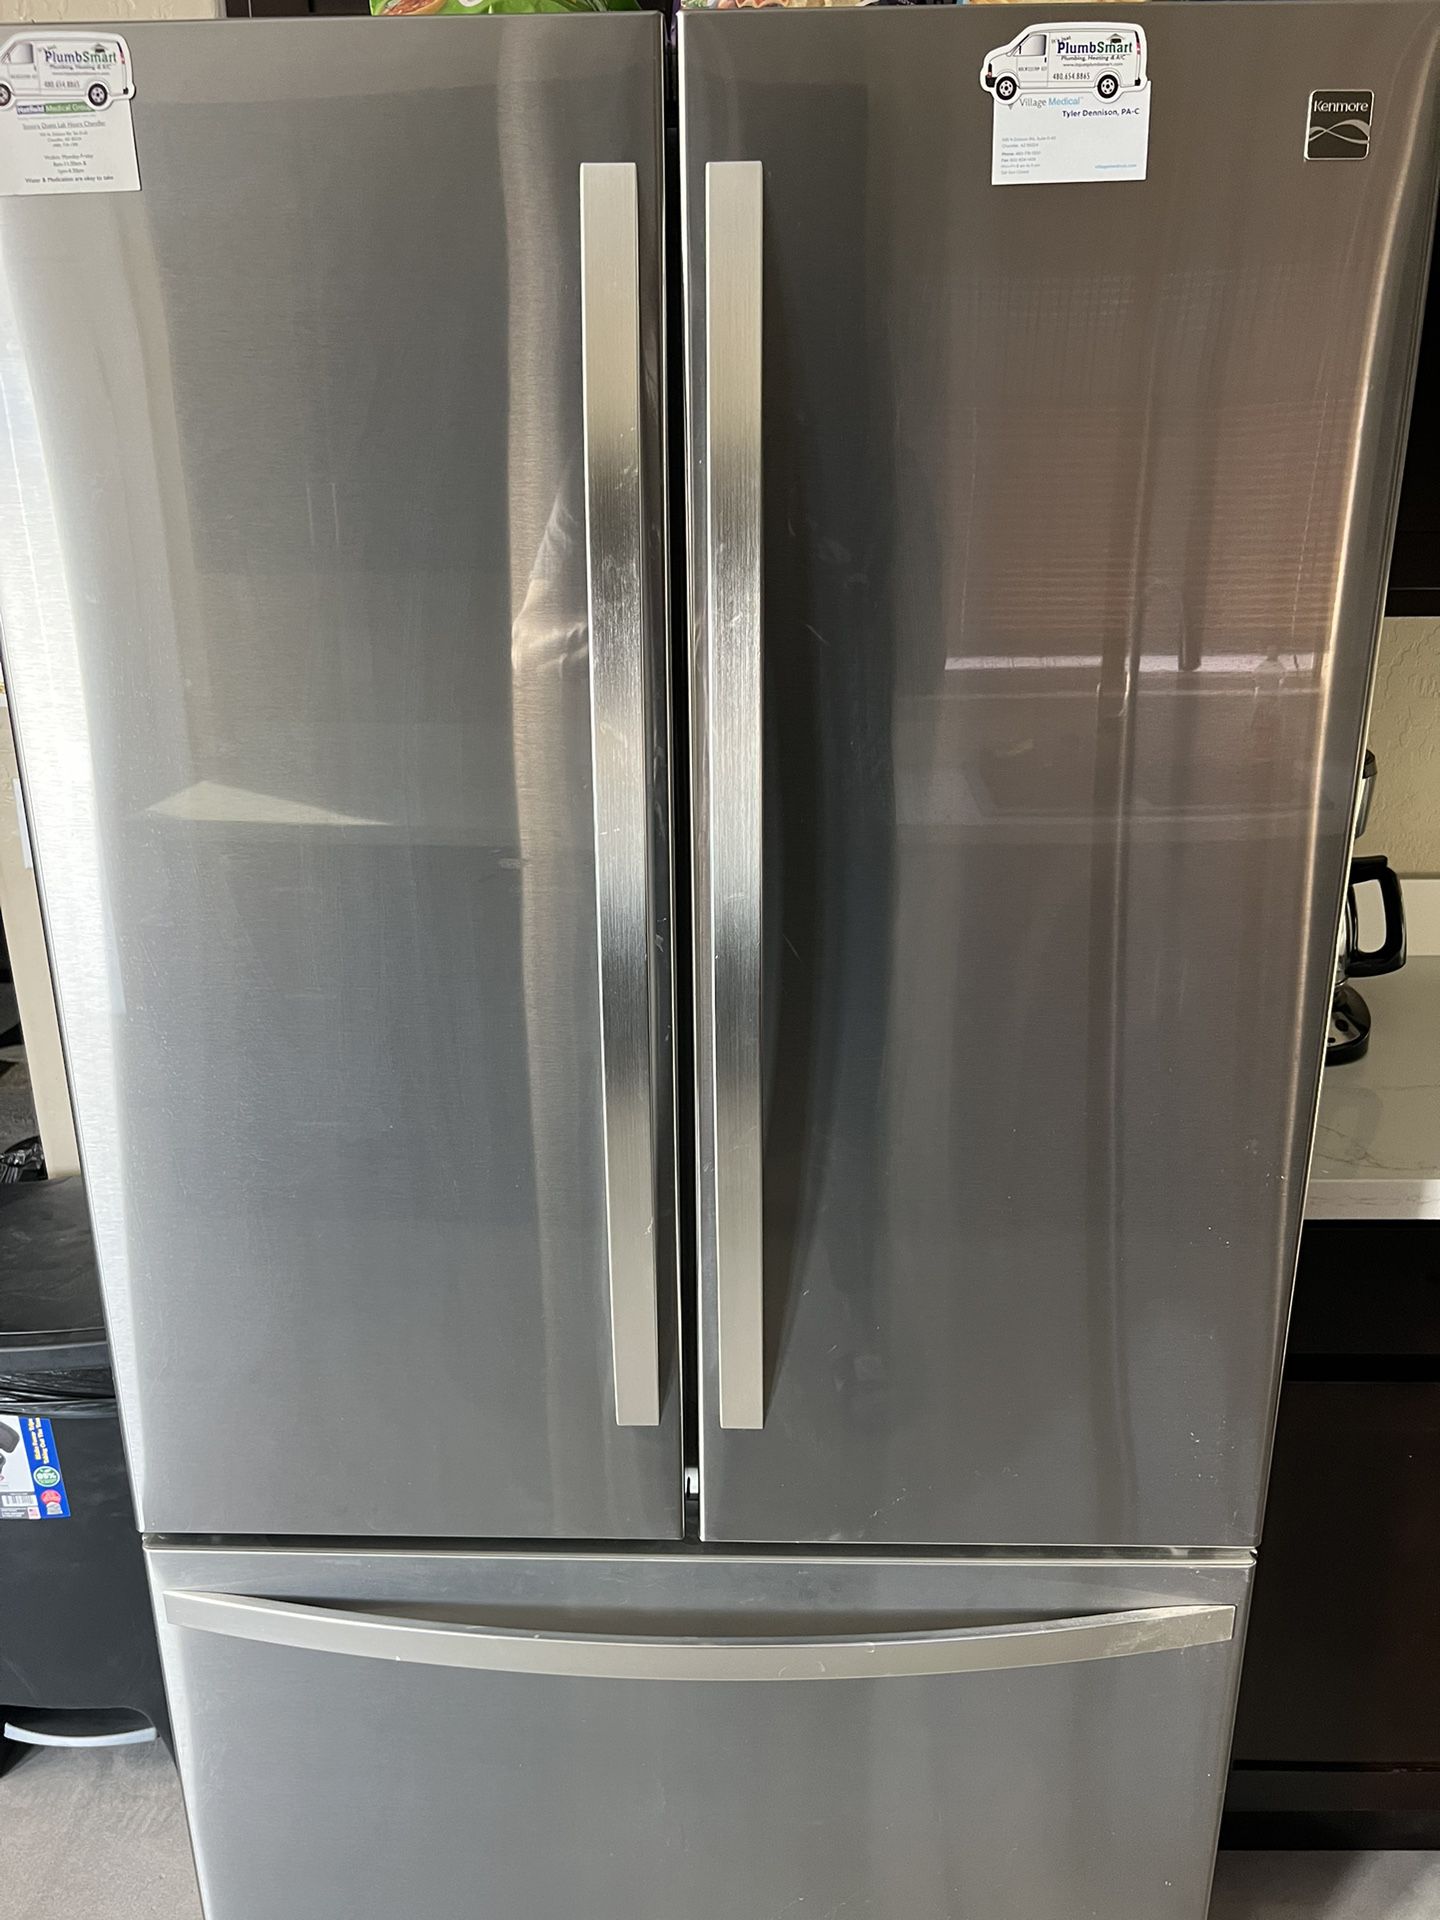 Sears Kenmore Stainless Steel Refrigerator 